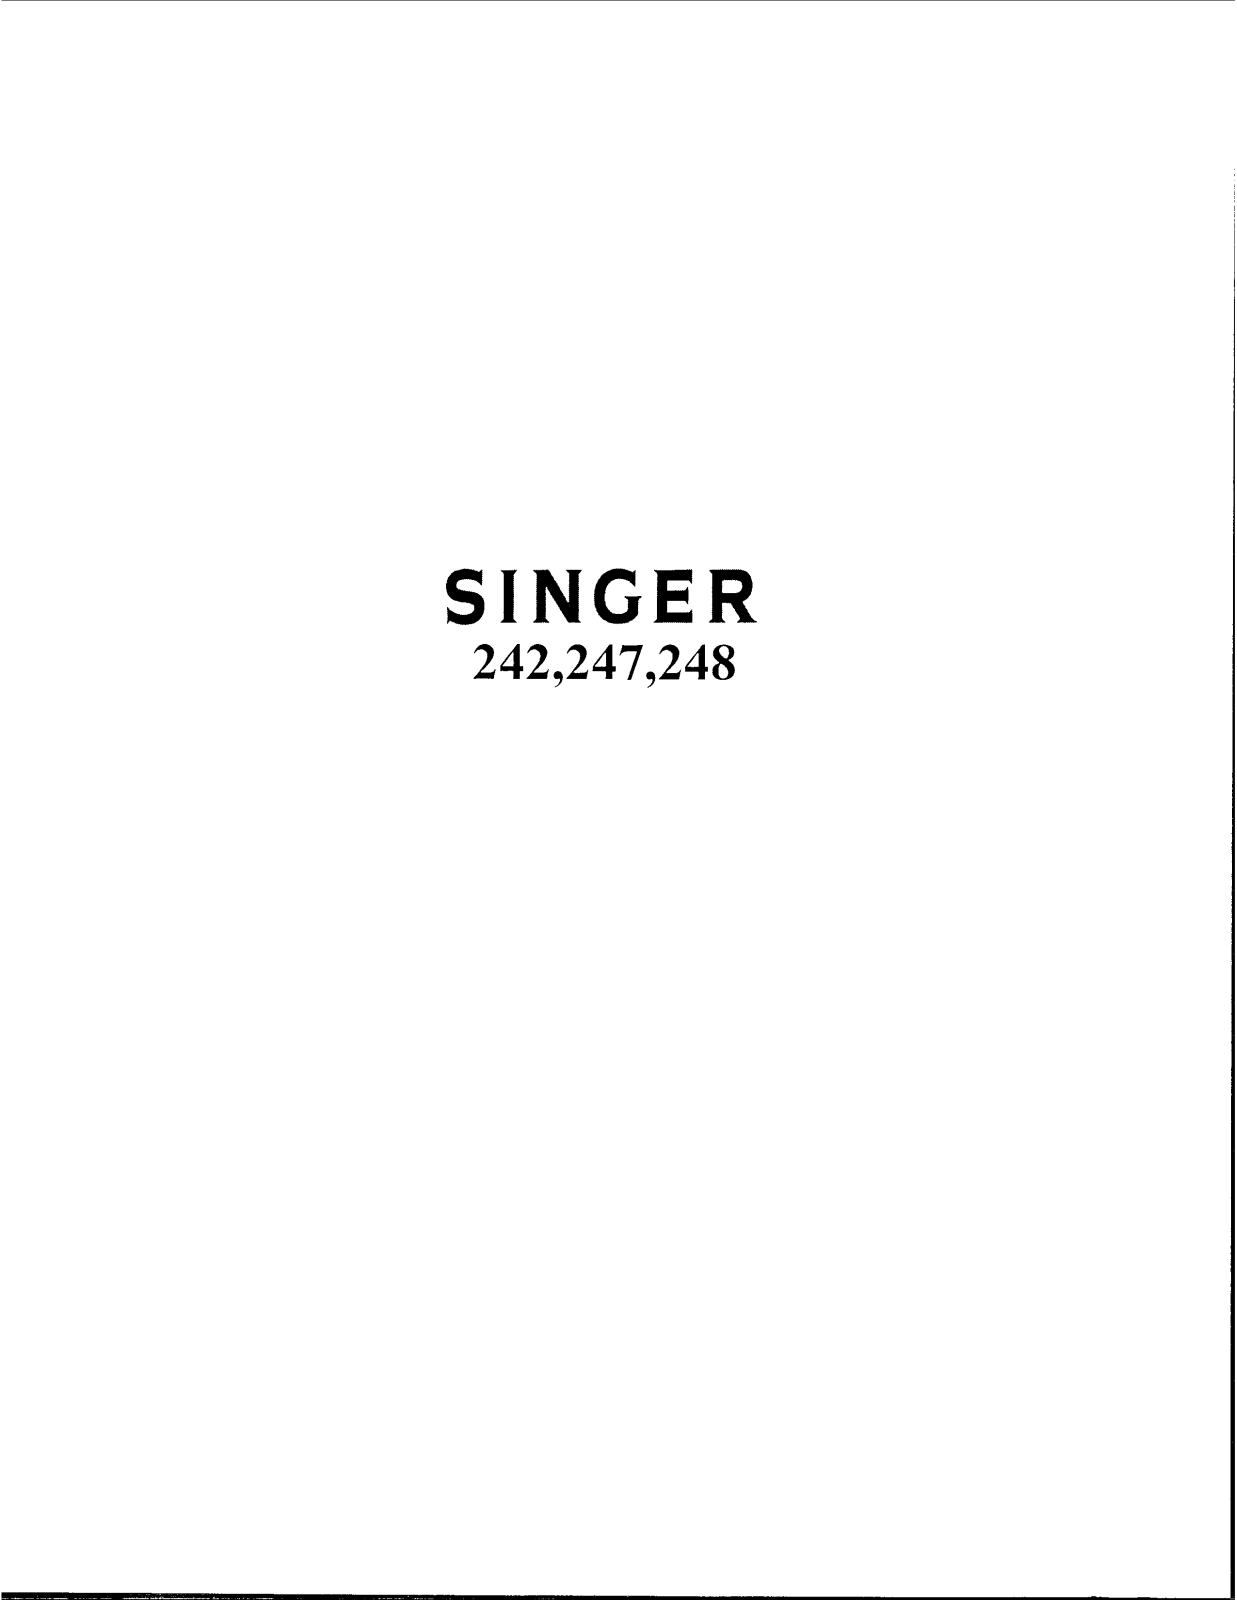 Singer 247, 248, 242 User Manual